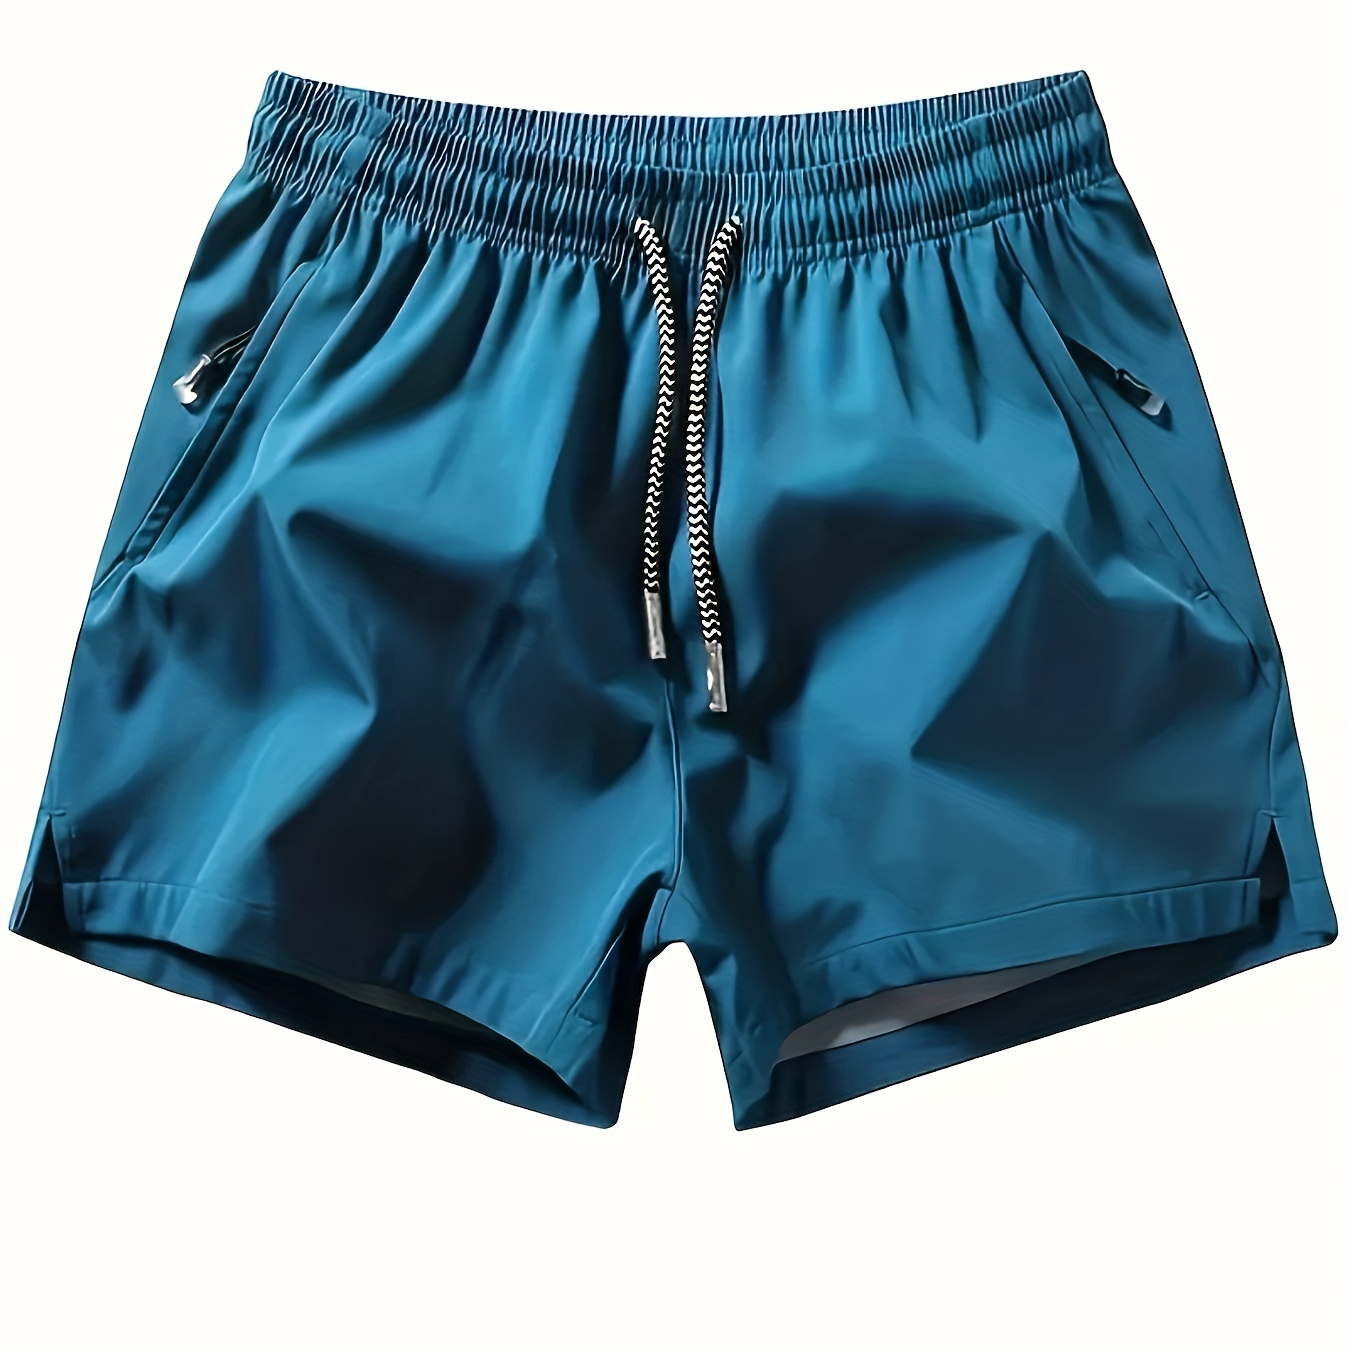 

Men's Zipper Pockets Active Shorts, Casual Waist Drawstring Quick Drying Shorts, Running, Sports, Fitness Quarters